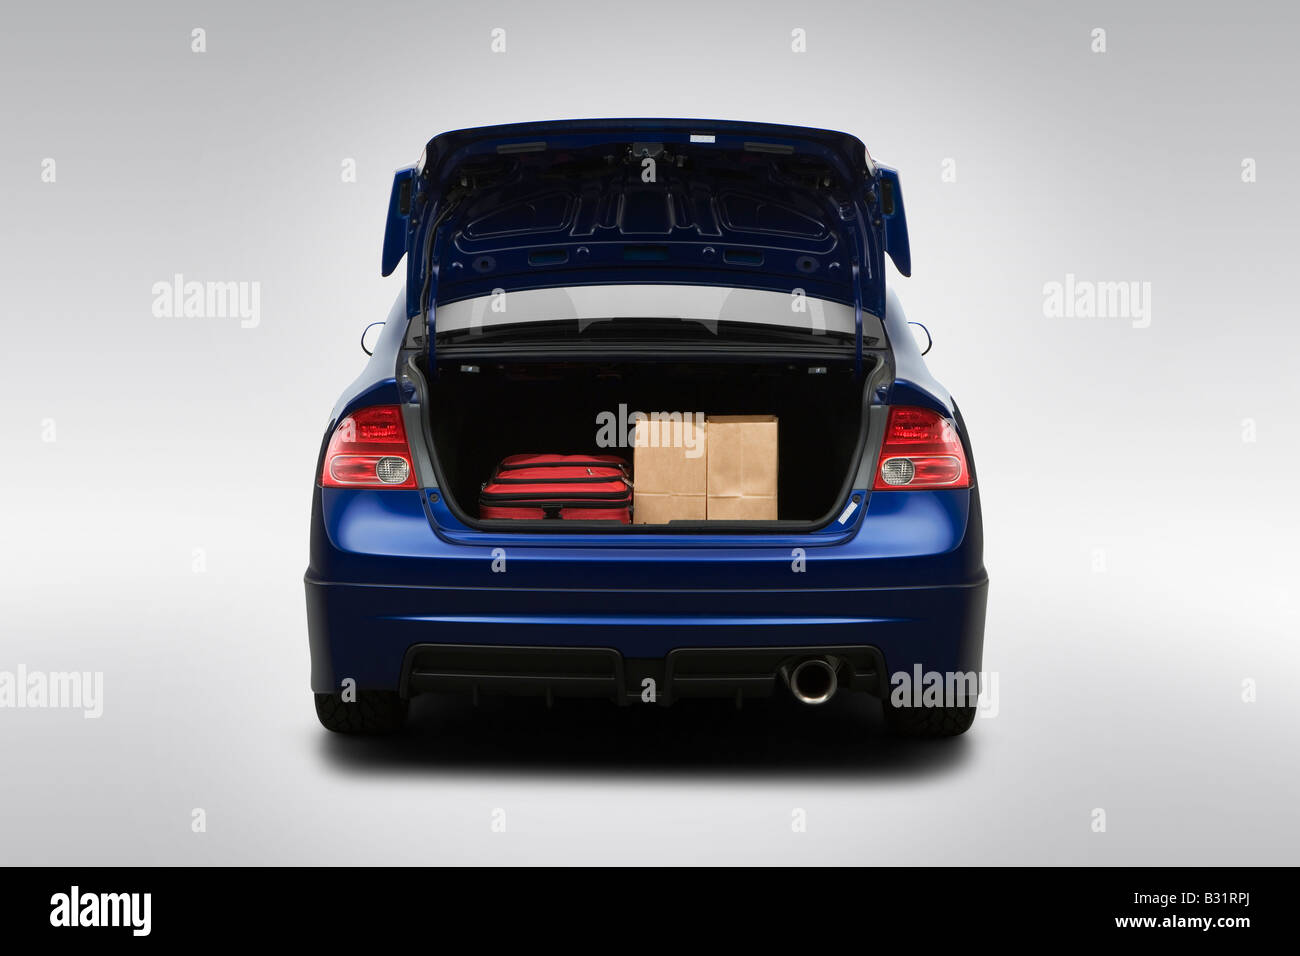 2008 Honda Civic SI Mugen in blau - Stamm Requisiten Stockfoto